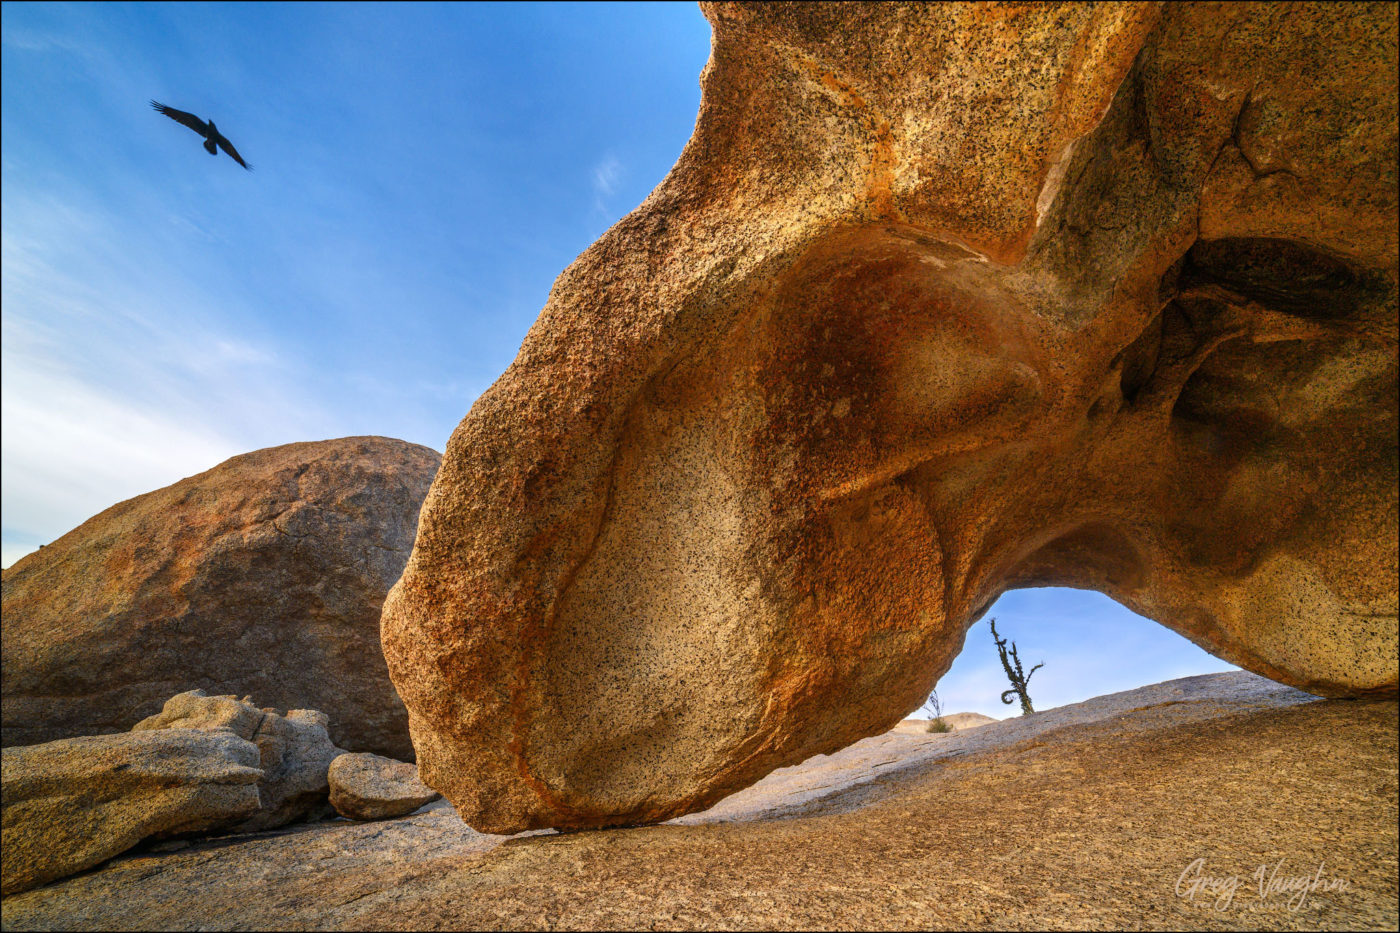 Raven flying over a sandstone rock formation in the Catavina desert of central Baja California, Mexico.